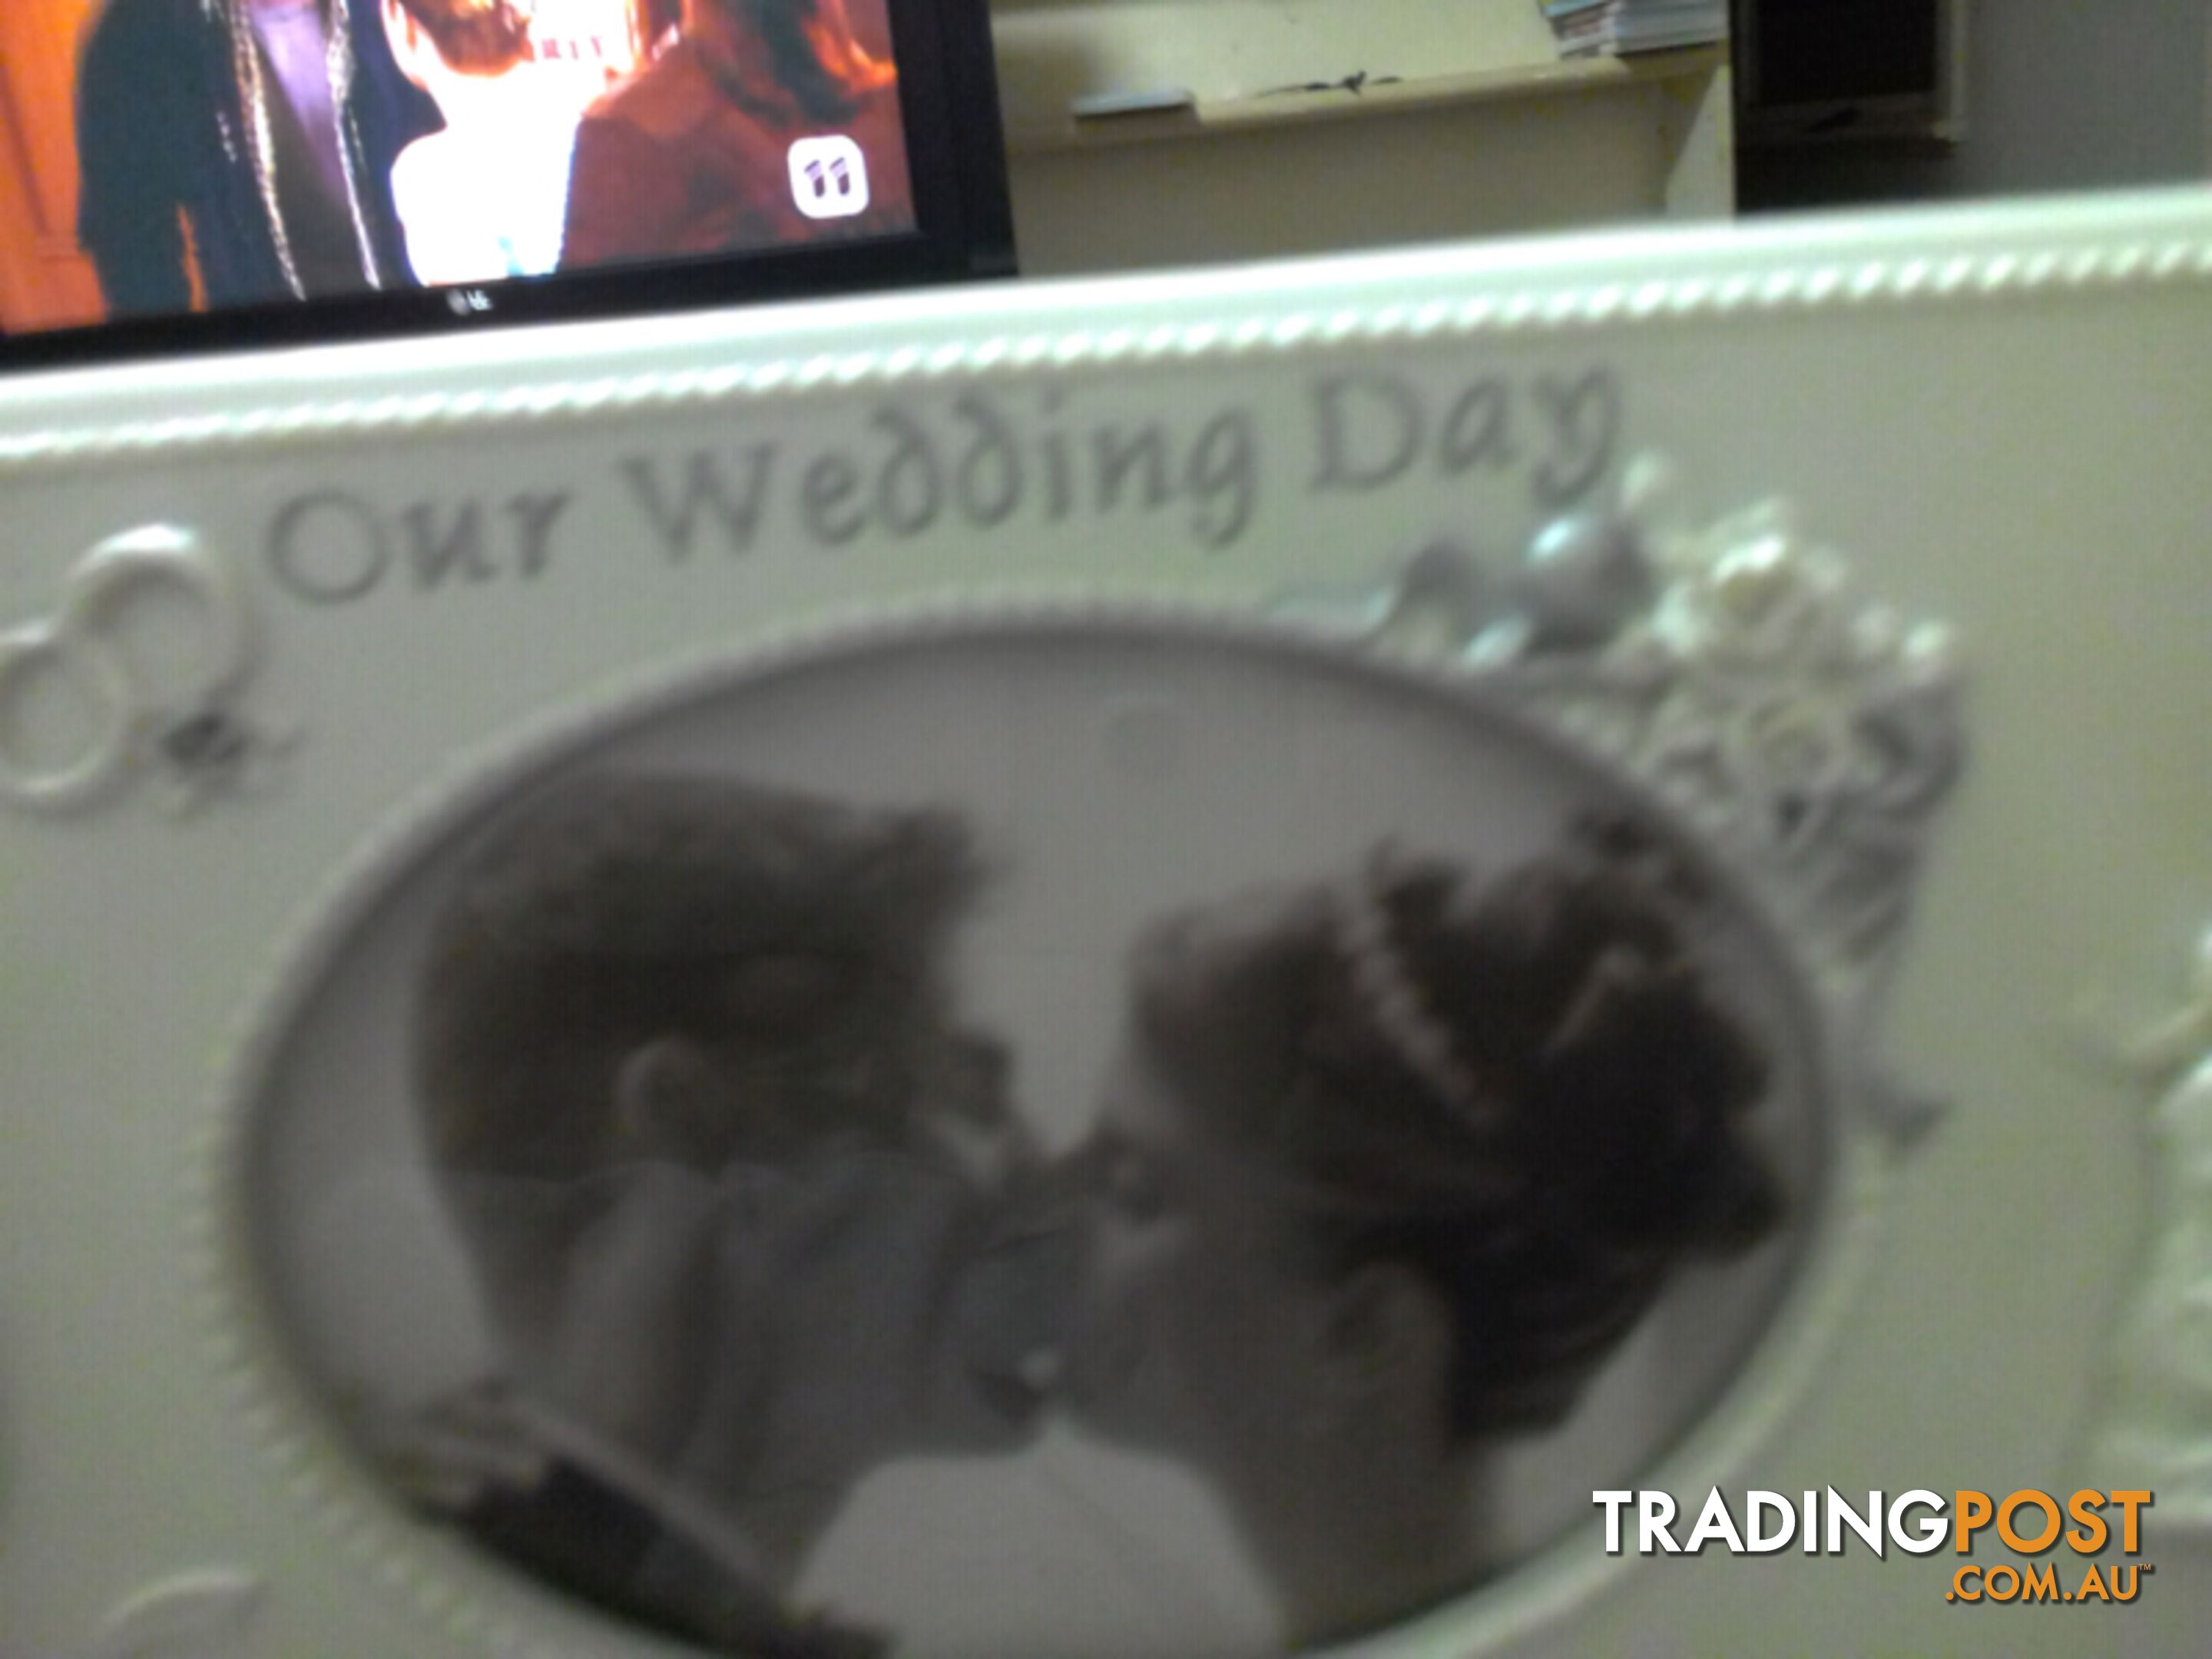 Photo frame WEDDING BESTMAN BRIDESMAID BRIDE & GROOM FRIENDS $35